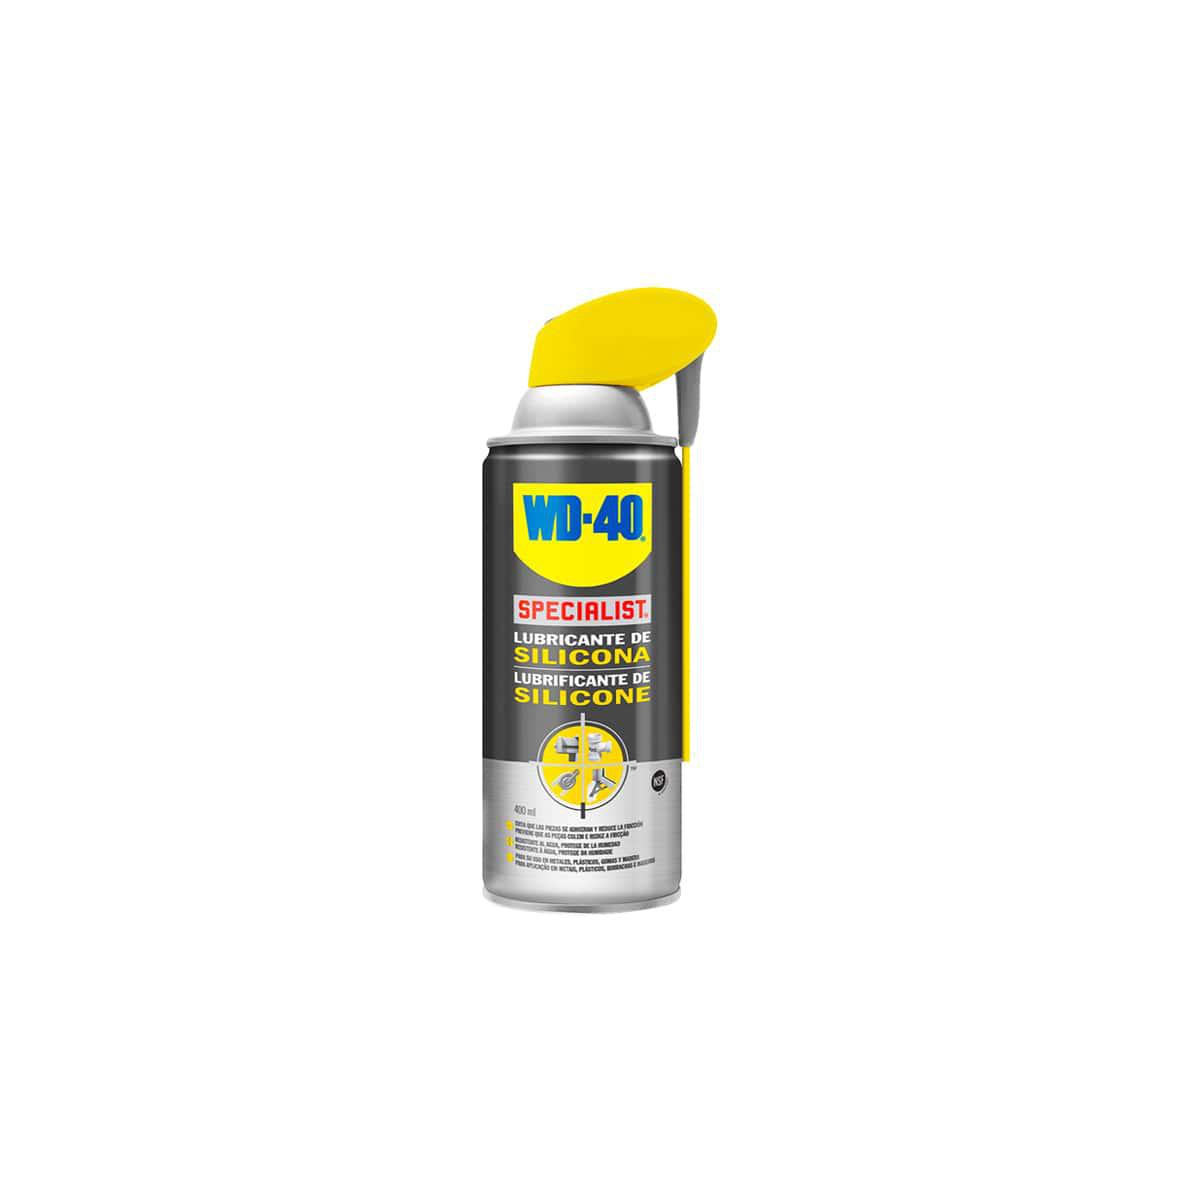 Wd40 - Lubrifiant silicone WD40 spray 400ml - Mastic, silicone, joint